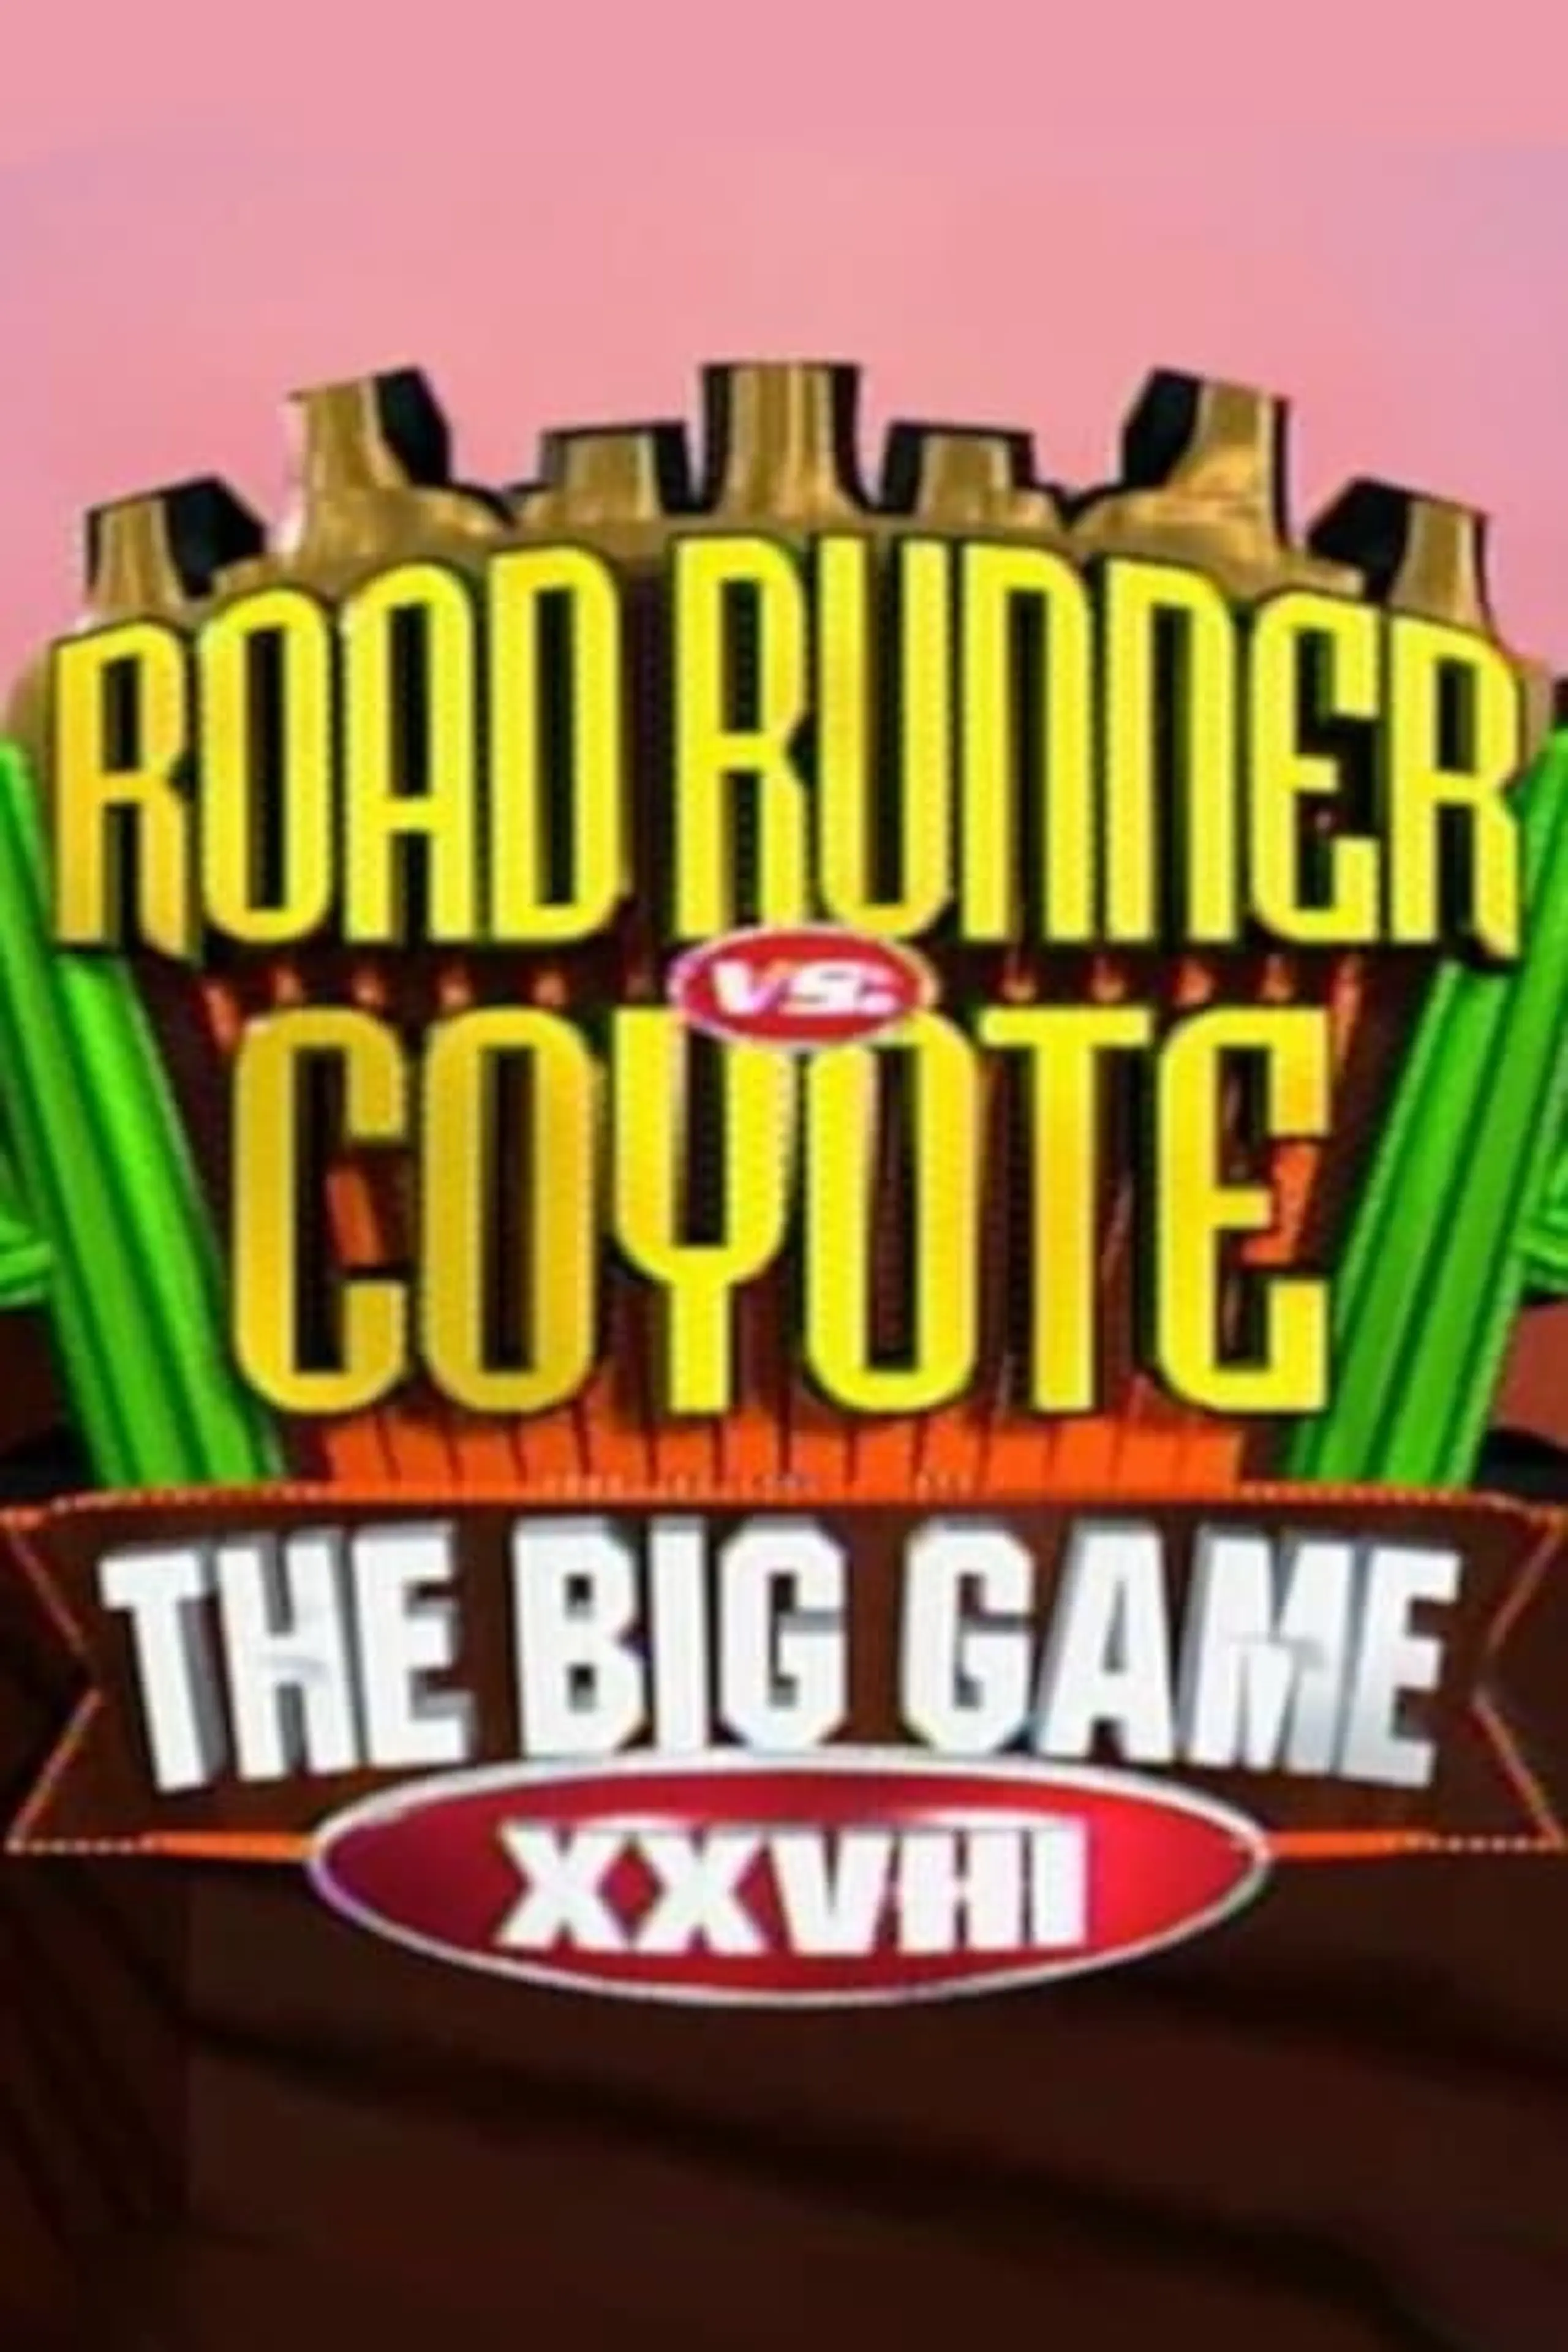 Big Game XXVIII: Road Runner vs. Coyote